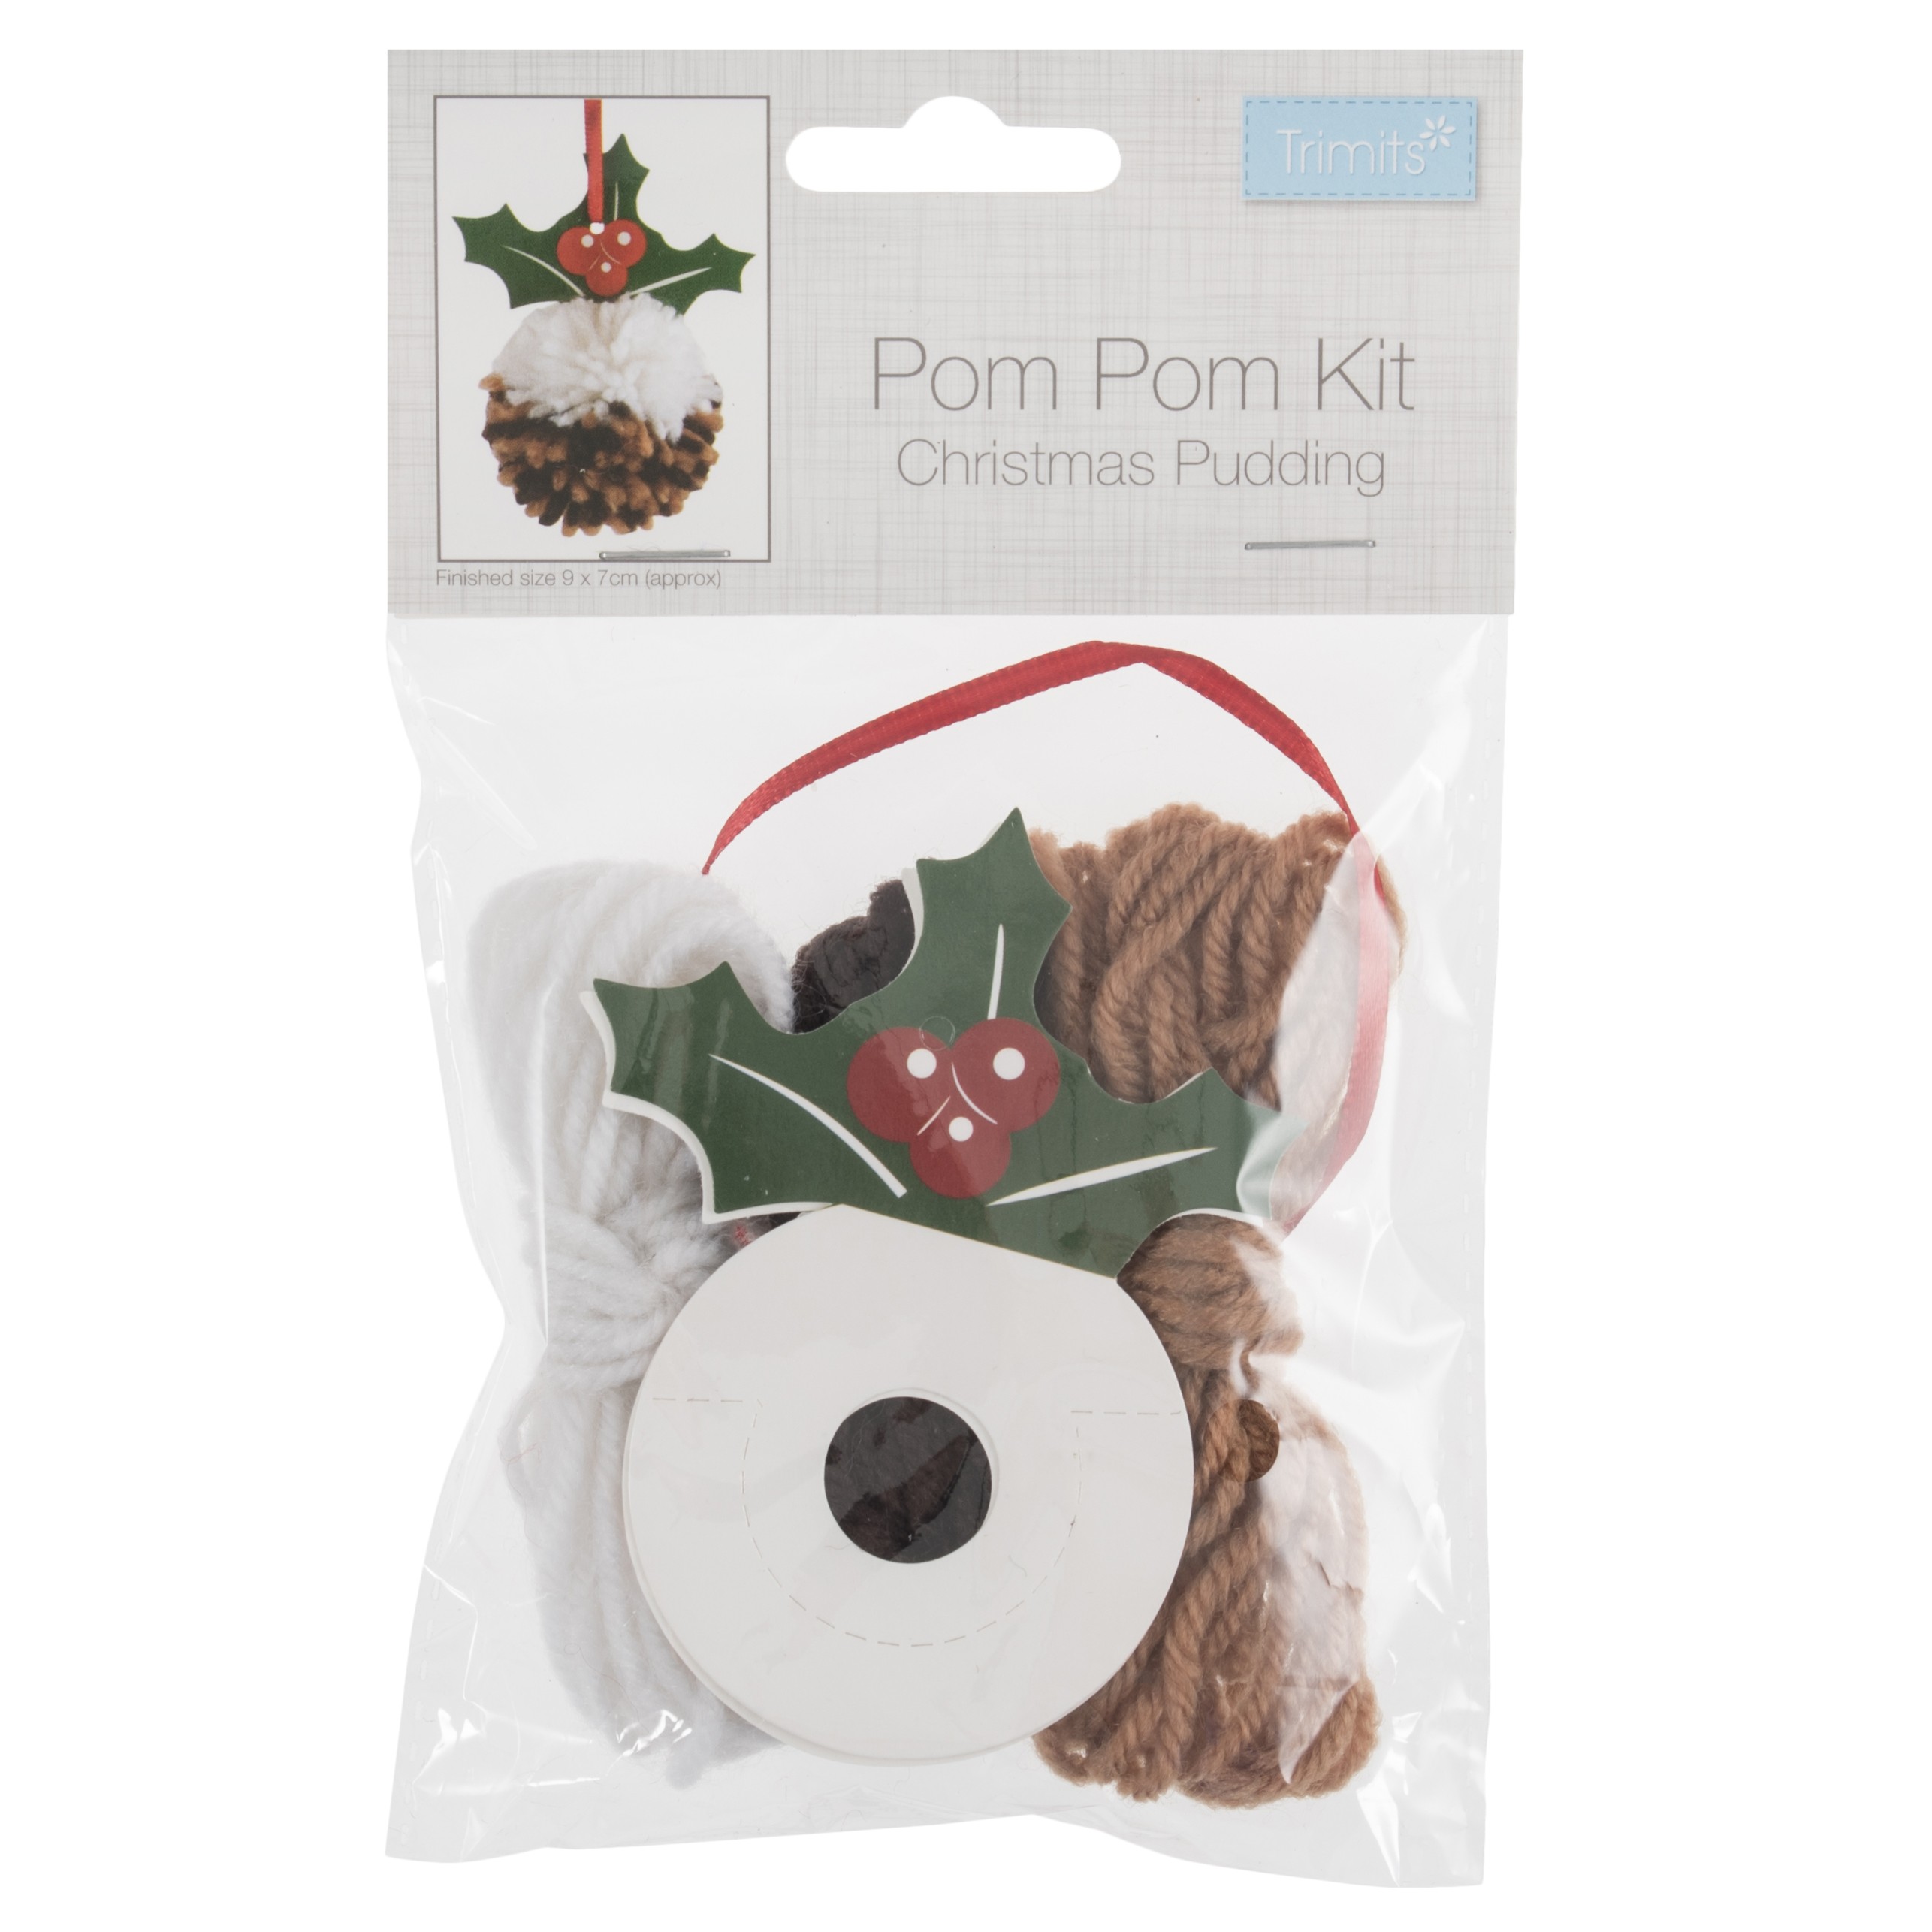 Trimits Pom Pom Kit - Christmas Pudding